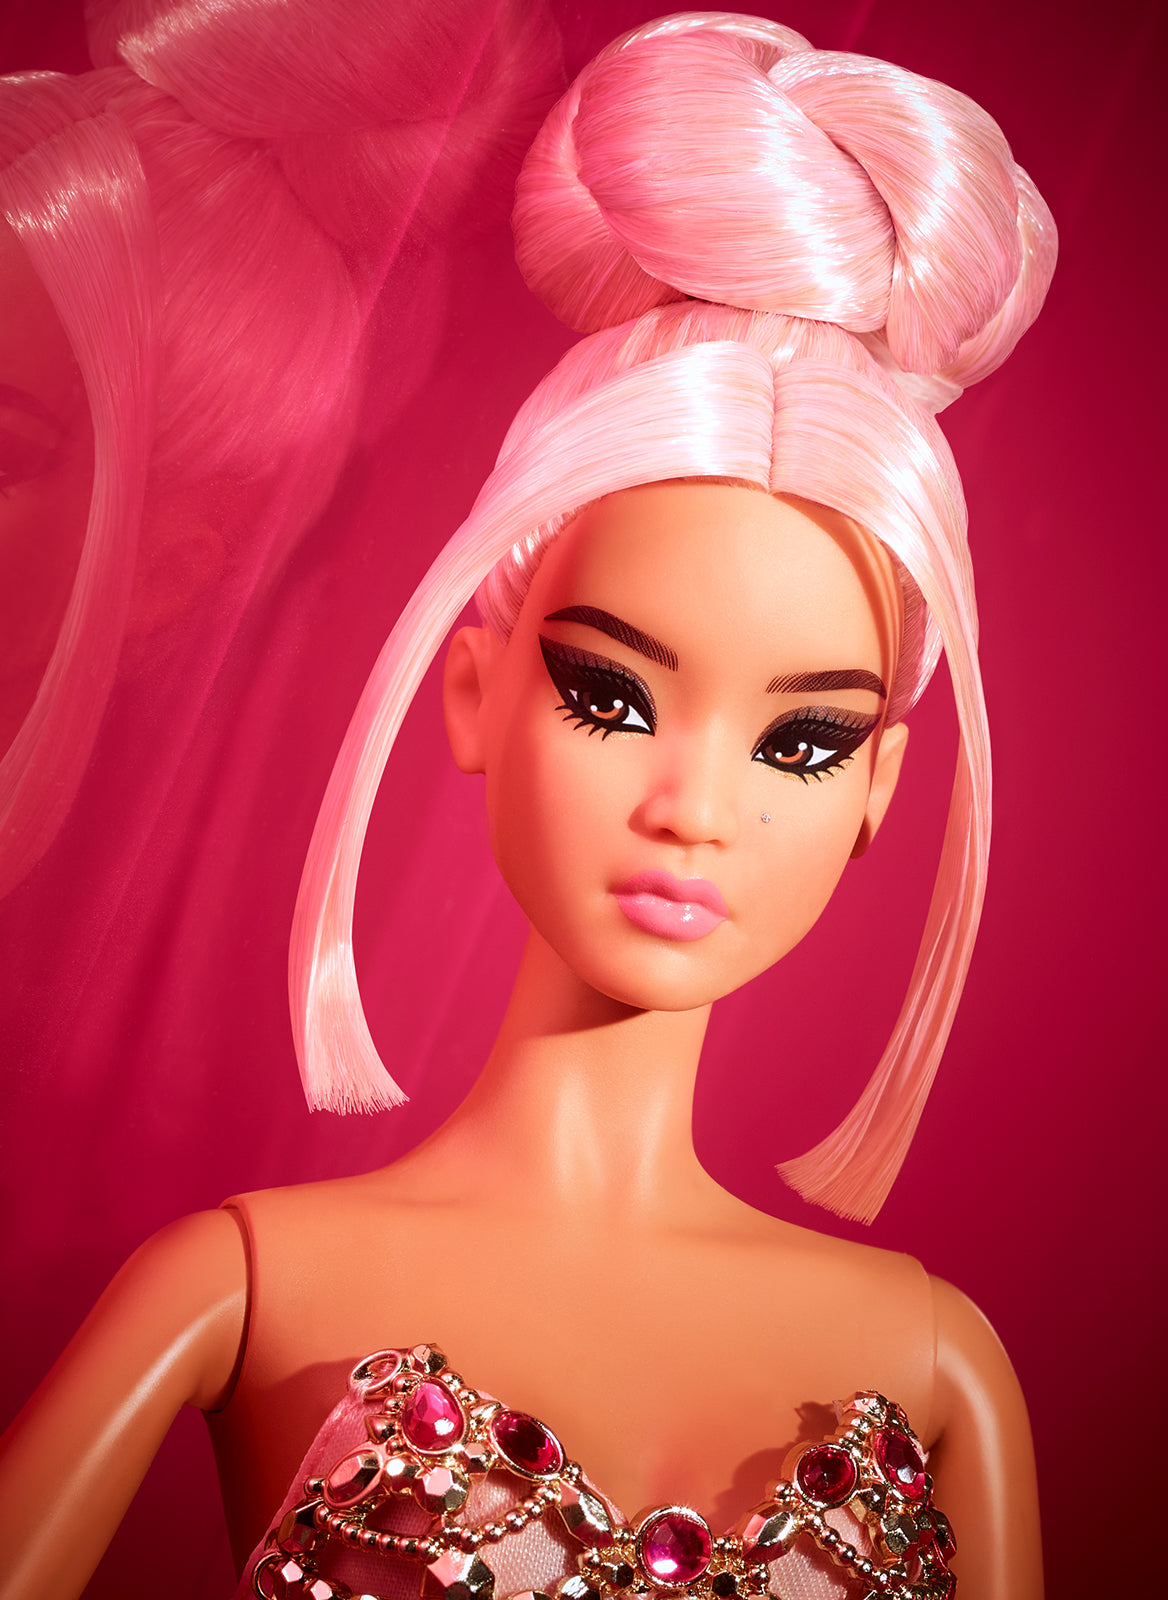 Pretty Pink & Pearl Carnival Barbie OOAK Molded Head Doll